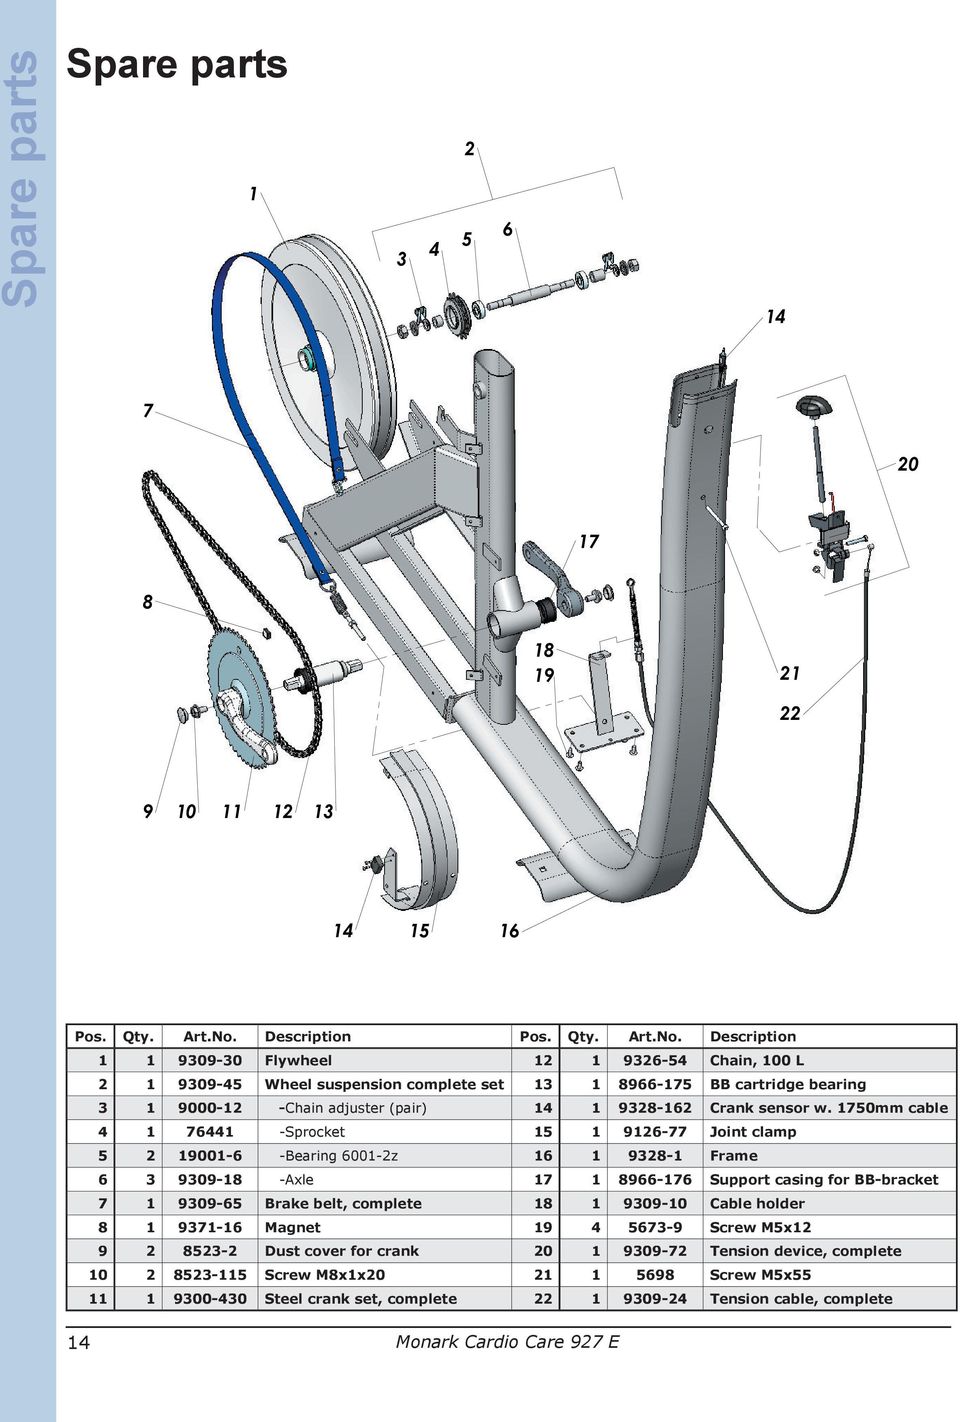 Description 1 1 9309-30 Flywheel 12 1 9326-54 Chain, 100 L 2 1 9309-45 Wheel suspension complete set 13 1 8966-175 BB cartridge bearing 3 1 9000-12 -Chain adjuster (pair) 14 1 9328-162 Crank sensor w.